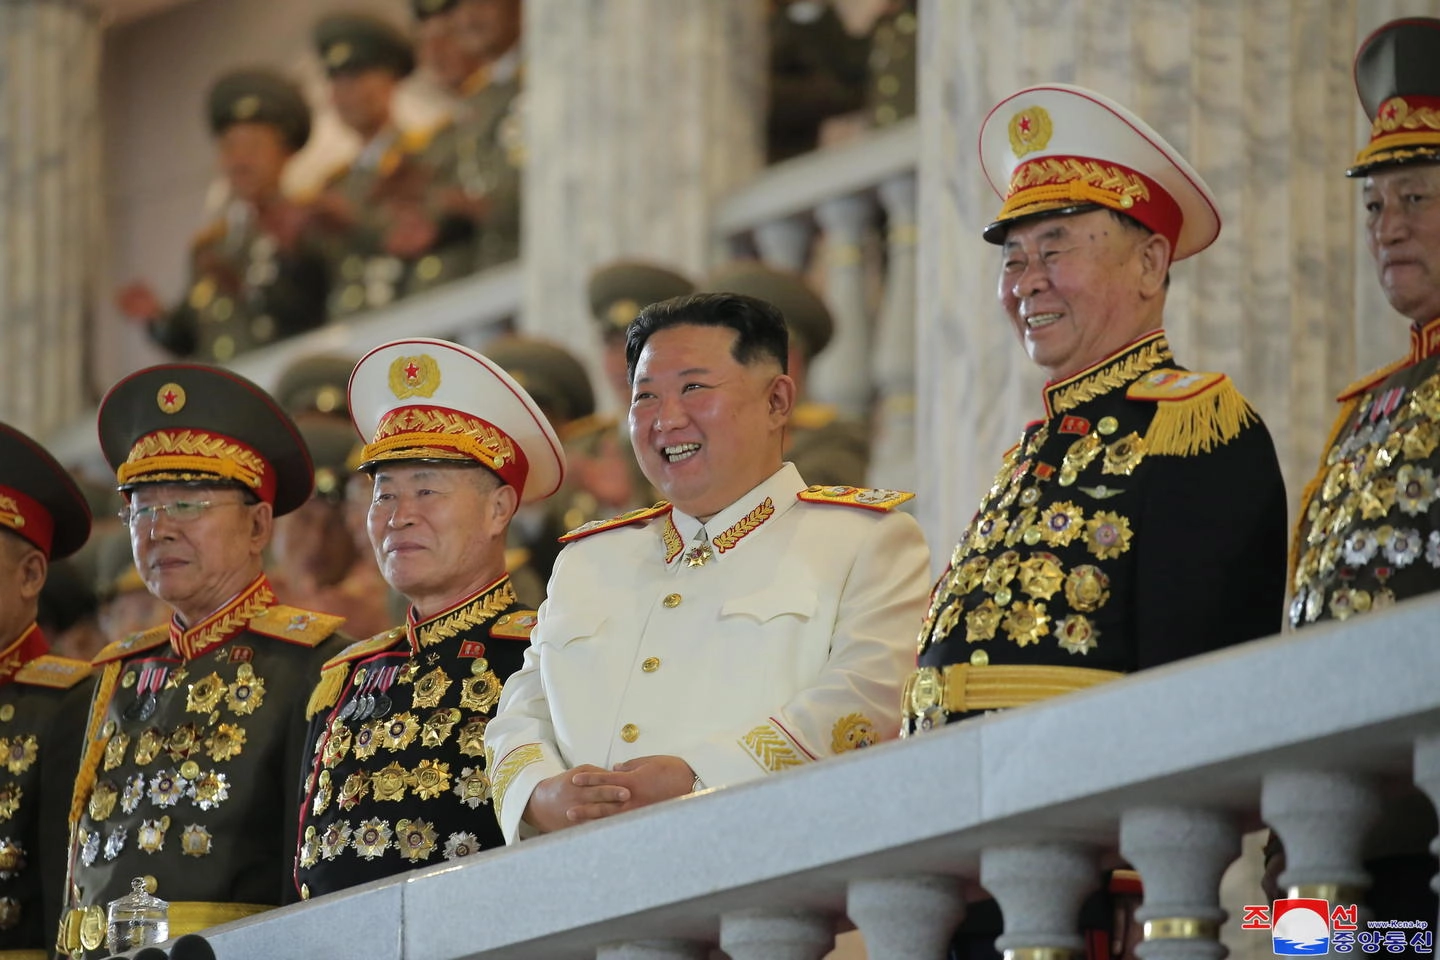 Kim Jong un alla parata militare (Ansa)